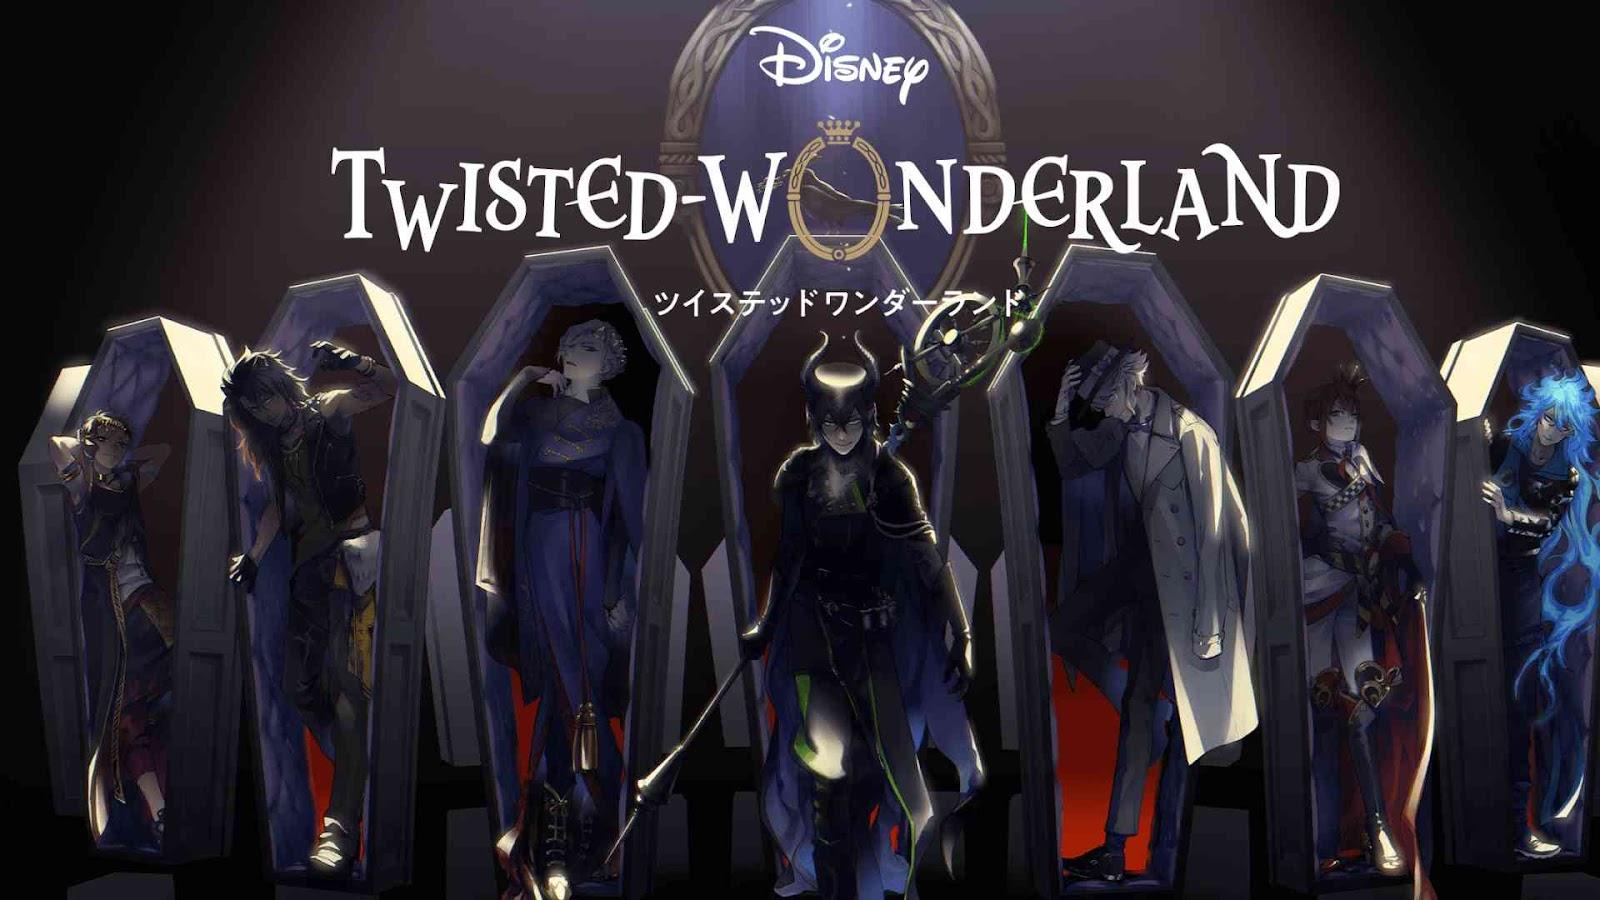 2.Disney Twisted-Wonderland